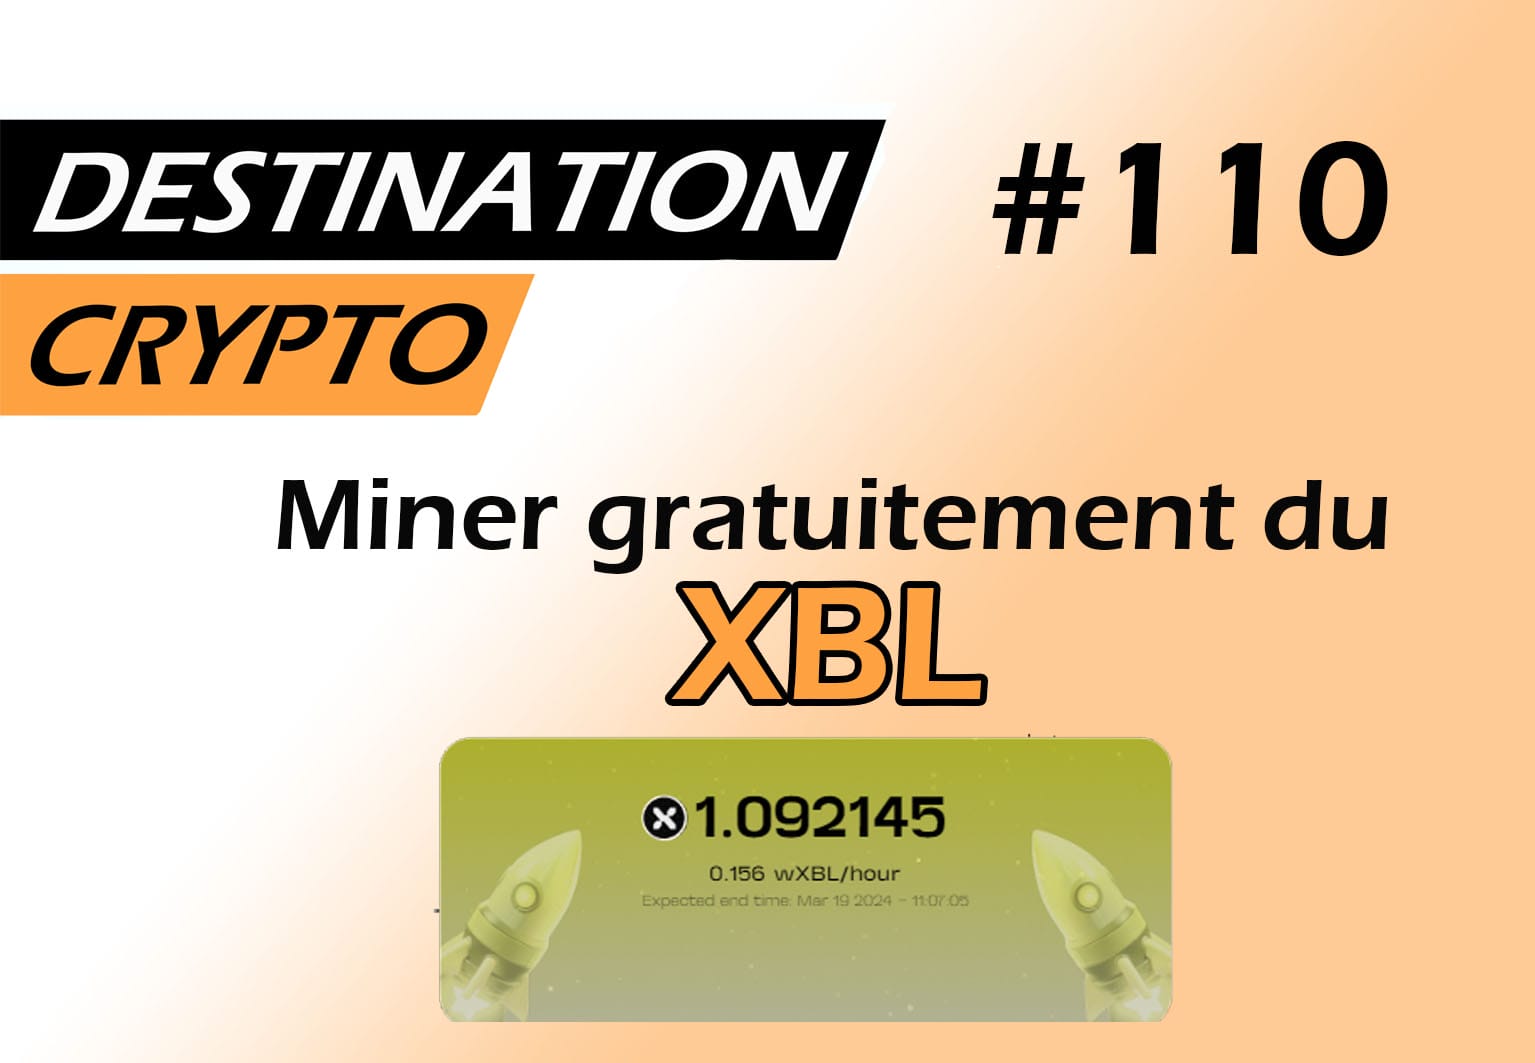 110# – Miner gratuitement la crypto XBL avec XBLAST (podcast)